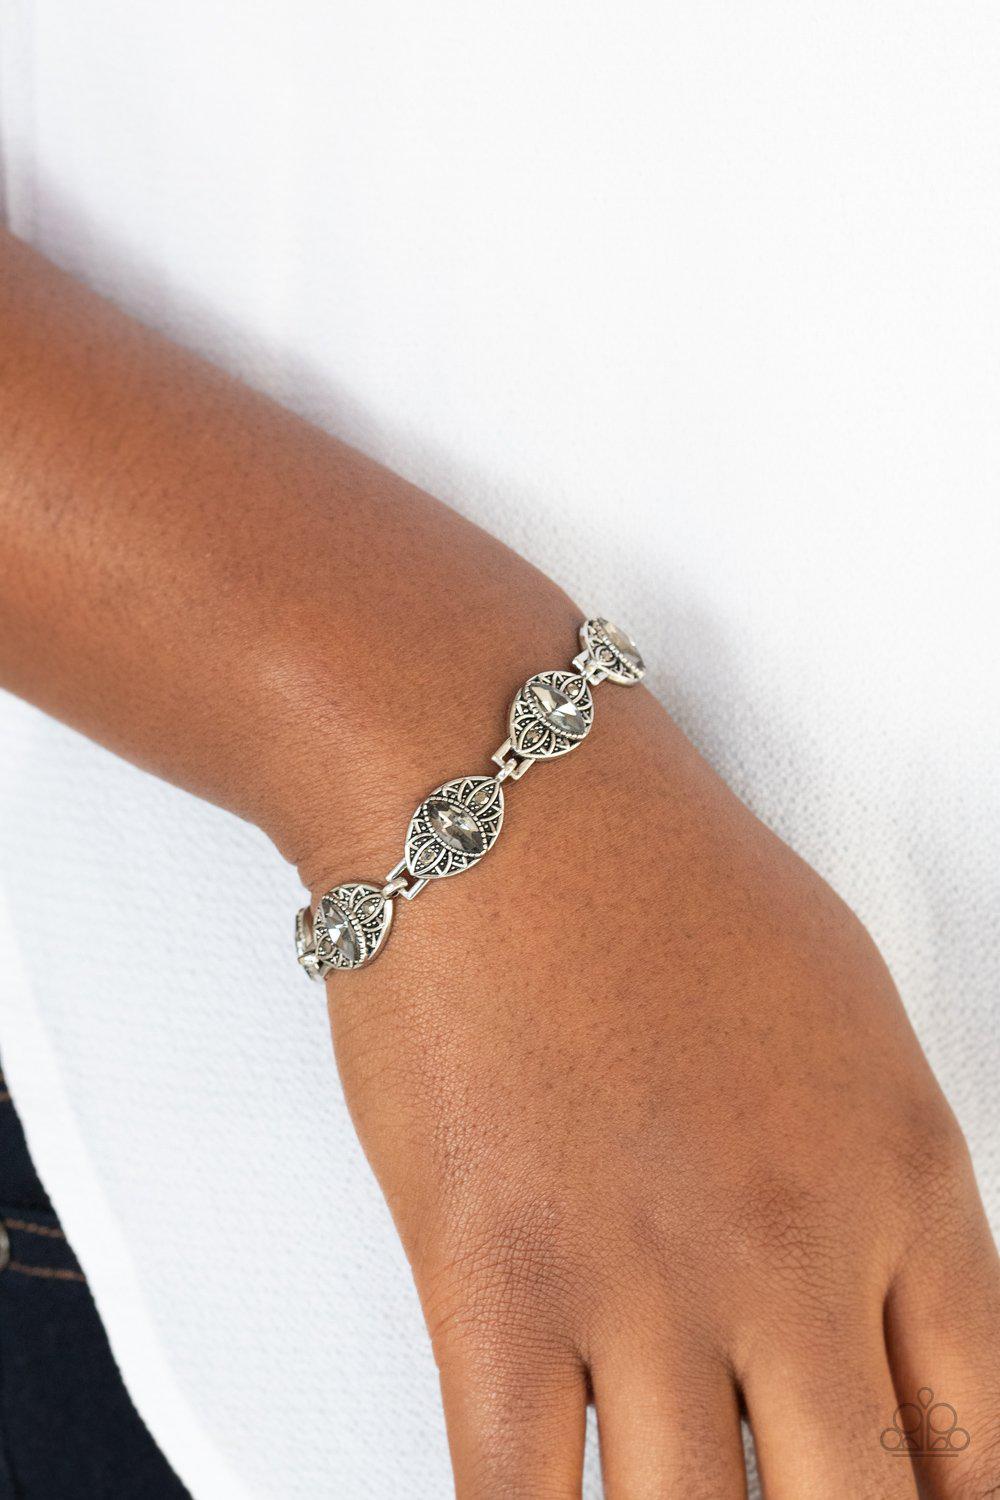 Crown Privilege Silver and Hematite Rhinestone Bracelet - Paparazzi Accessories- model - CarasShop.com - $5 Jewelry by Cara Jewels